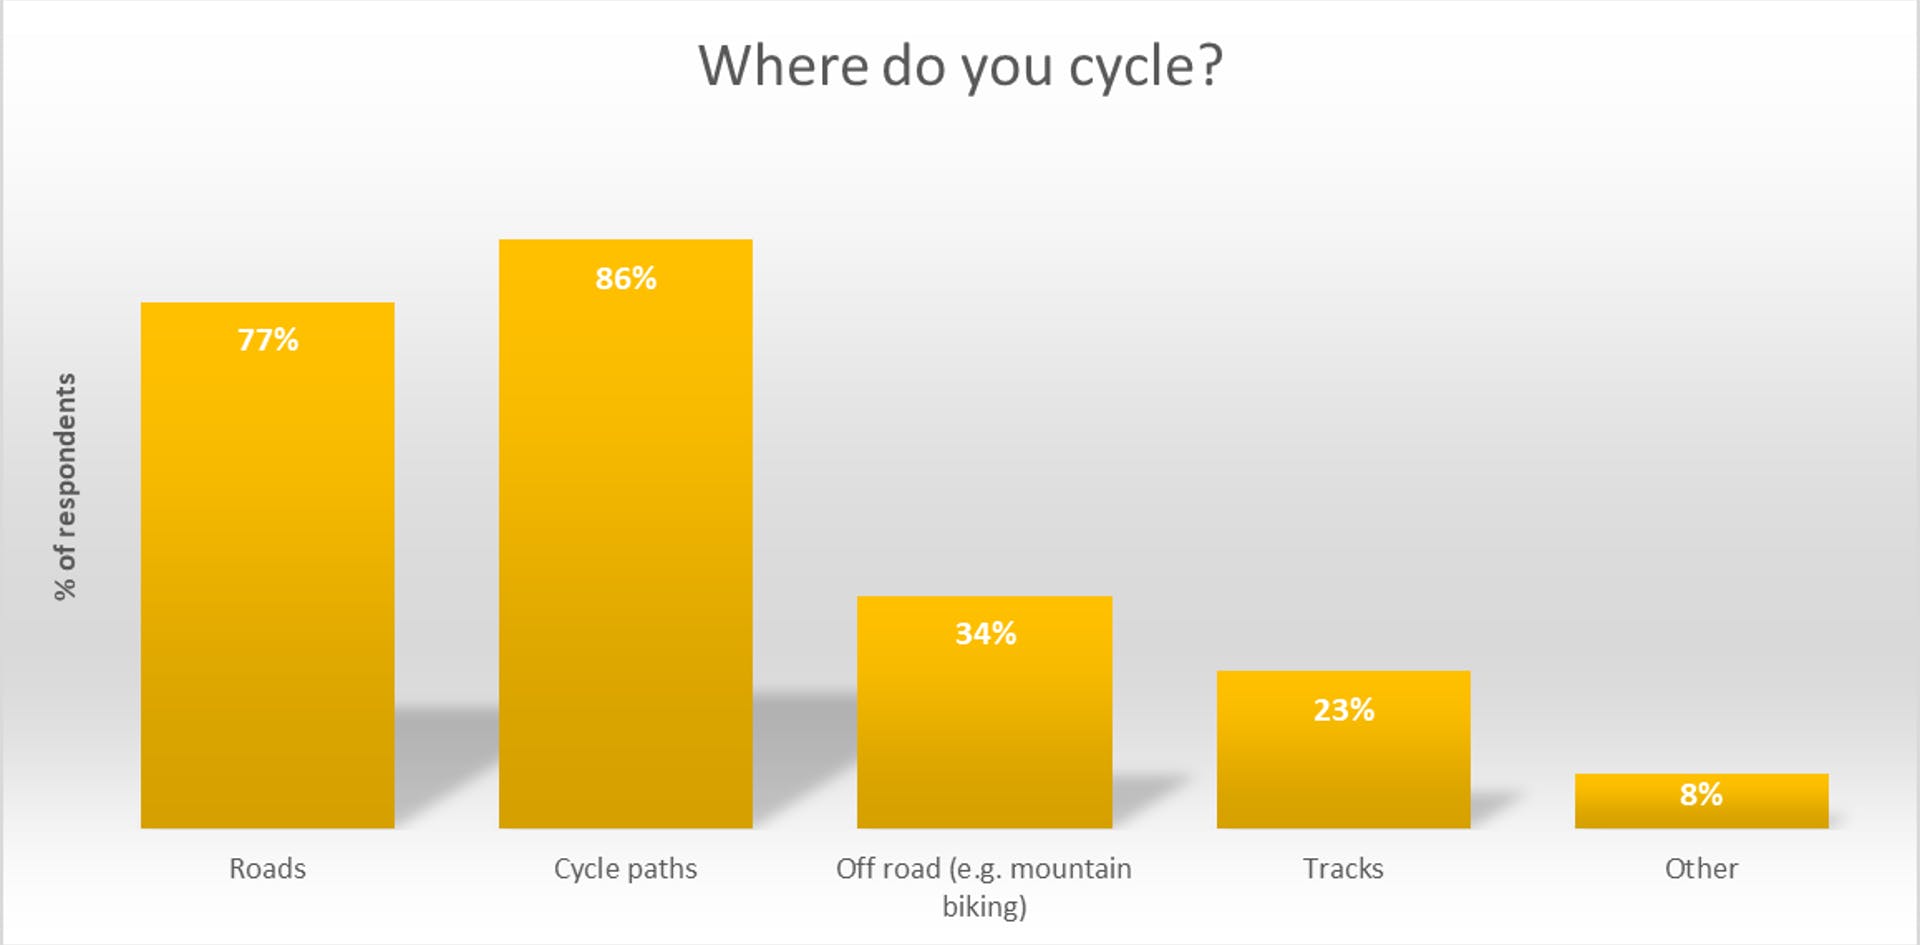 Where do you cycle?